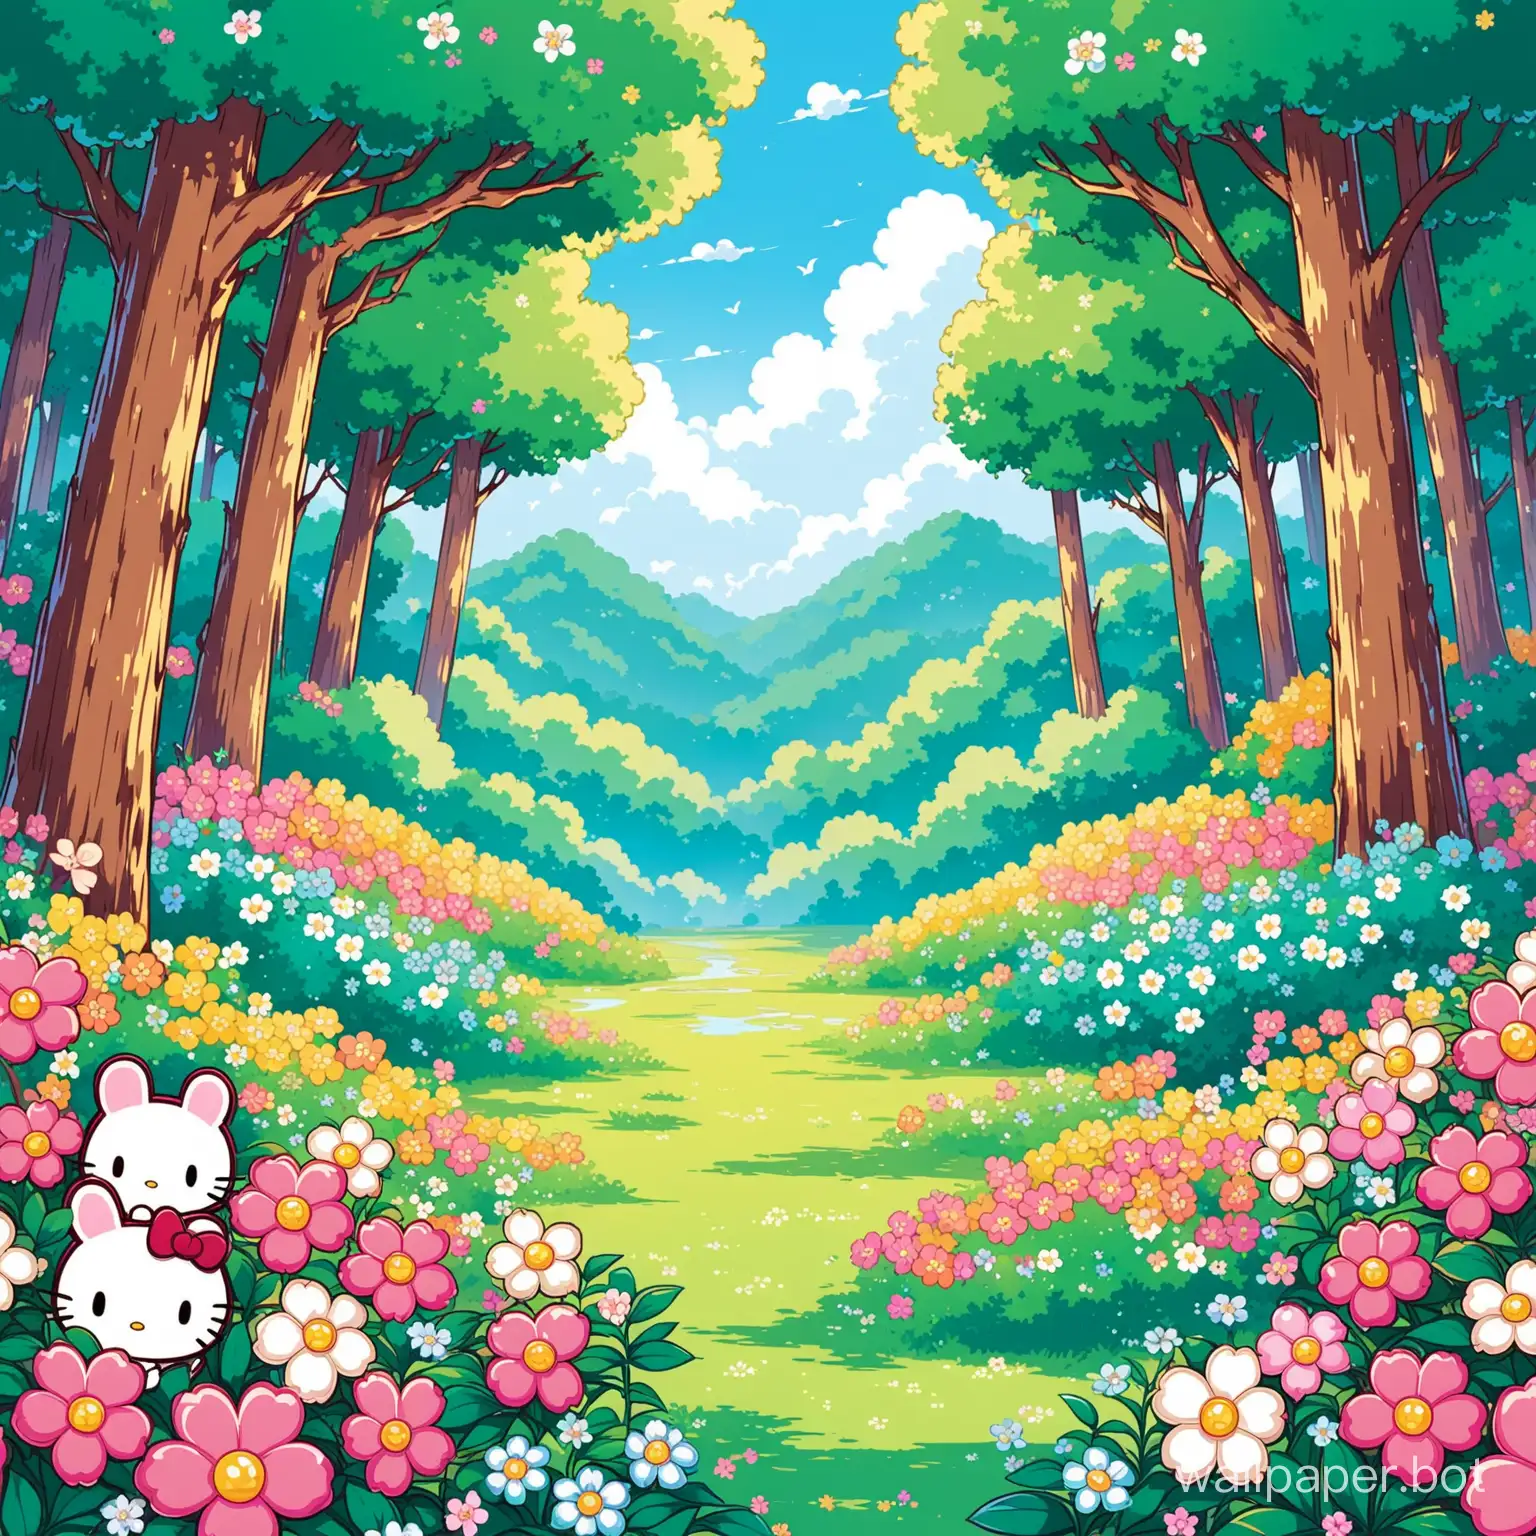 forest backdrop floral
Sanrio